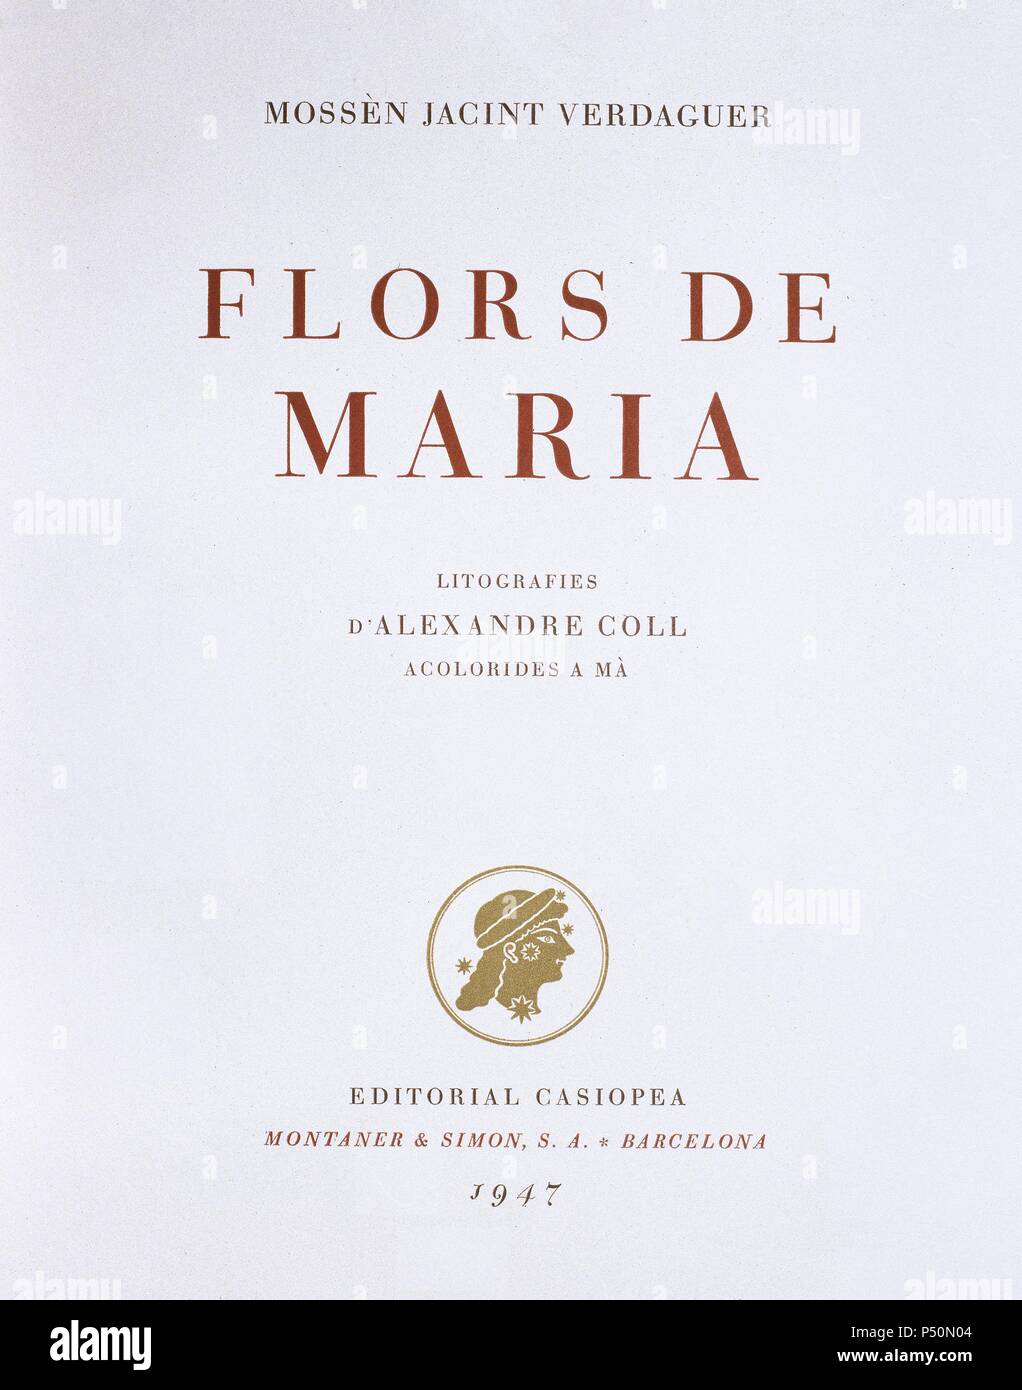 VERDAGUER, Jacint (1845-1902). Poeta en lengua catalana. 'FLORS DE MARIA' (1902). Portada de la primera edición de 1947. Stock Photo